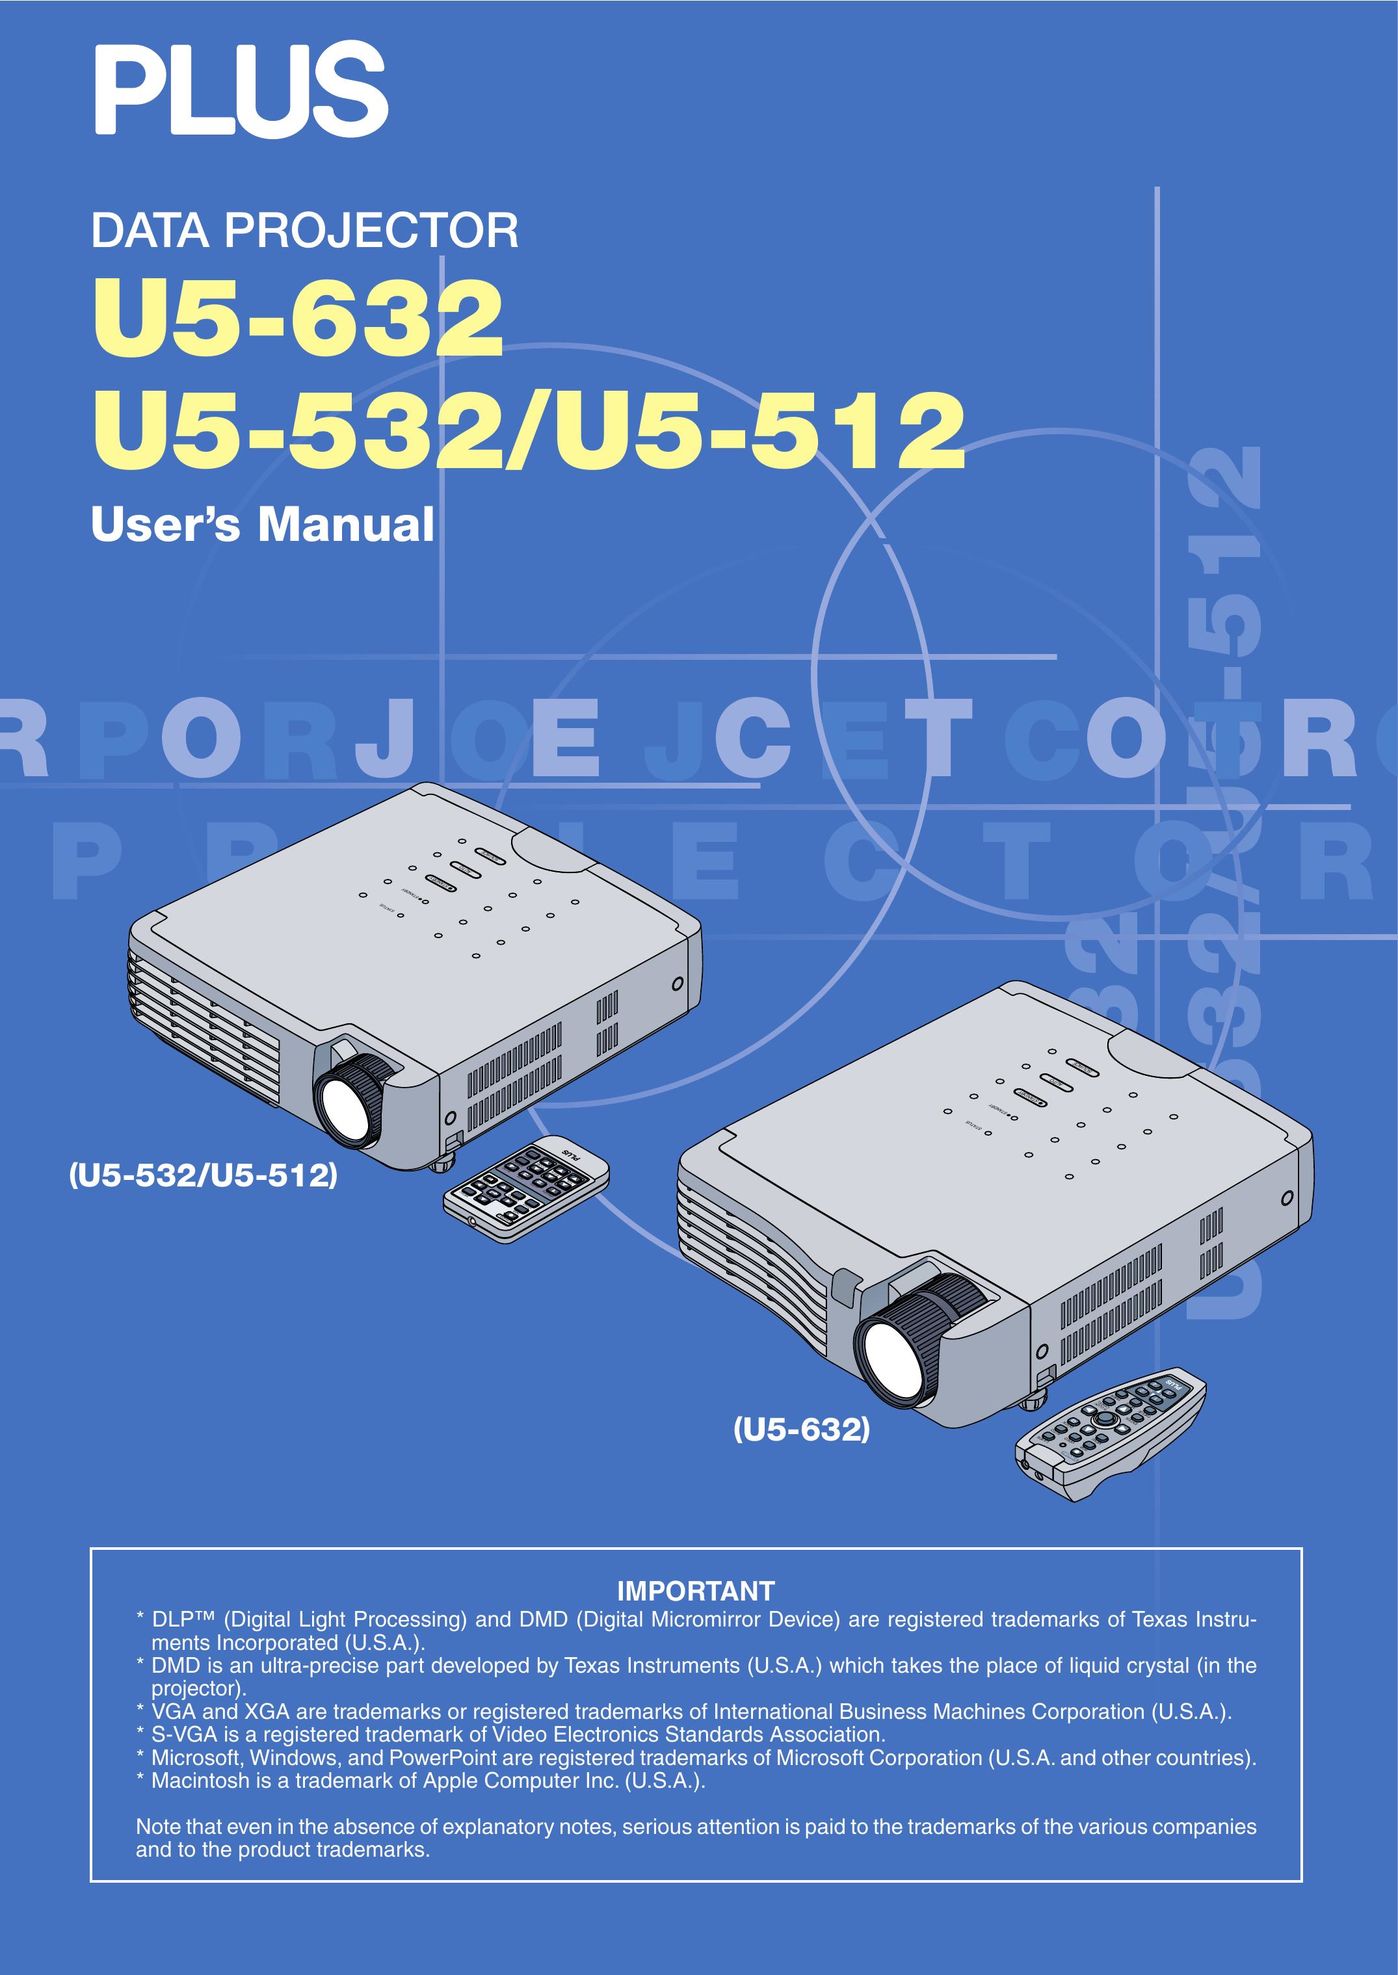 PLUS Vision U5-512 Projector User Manual